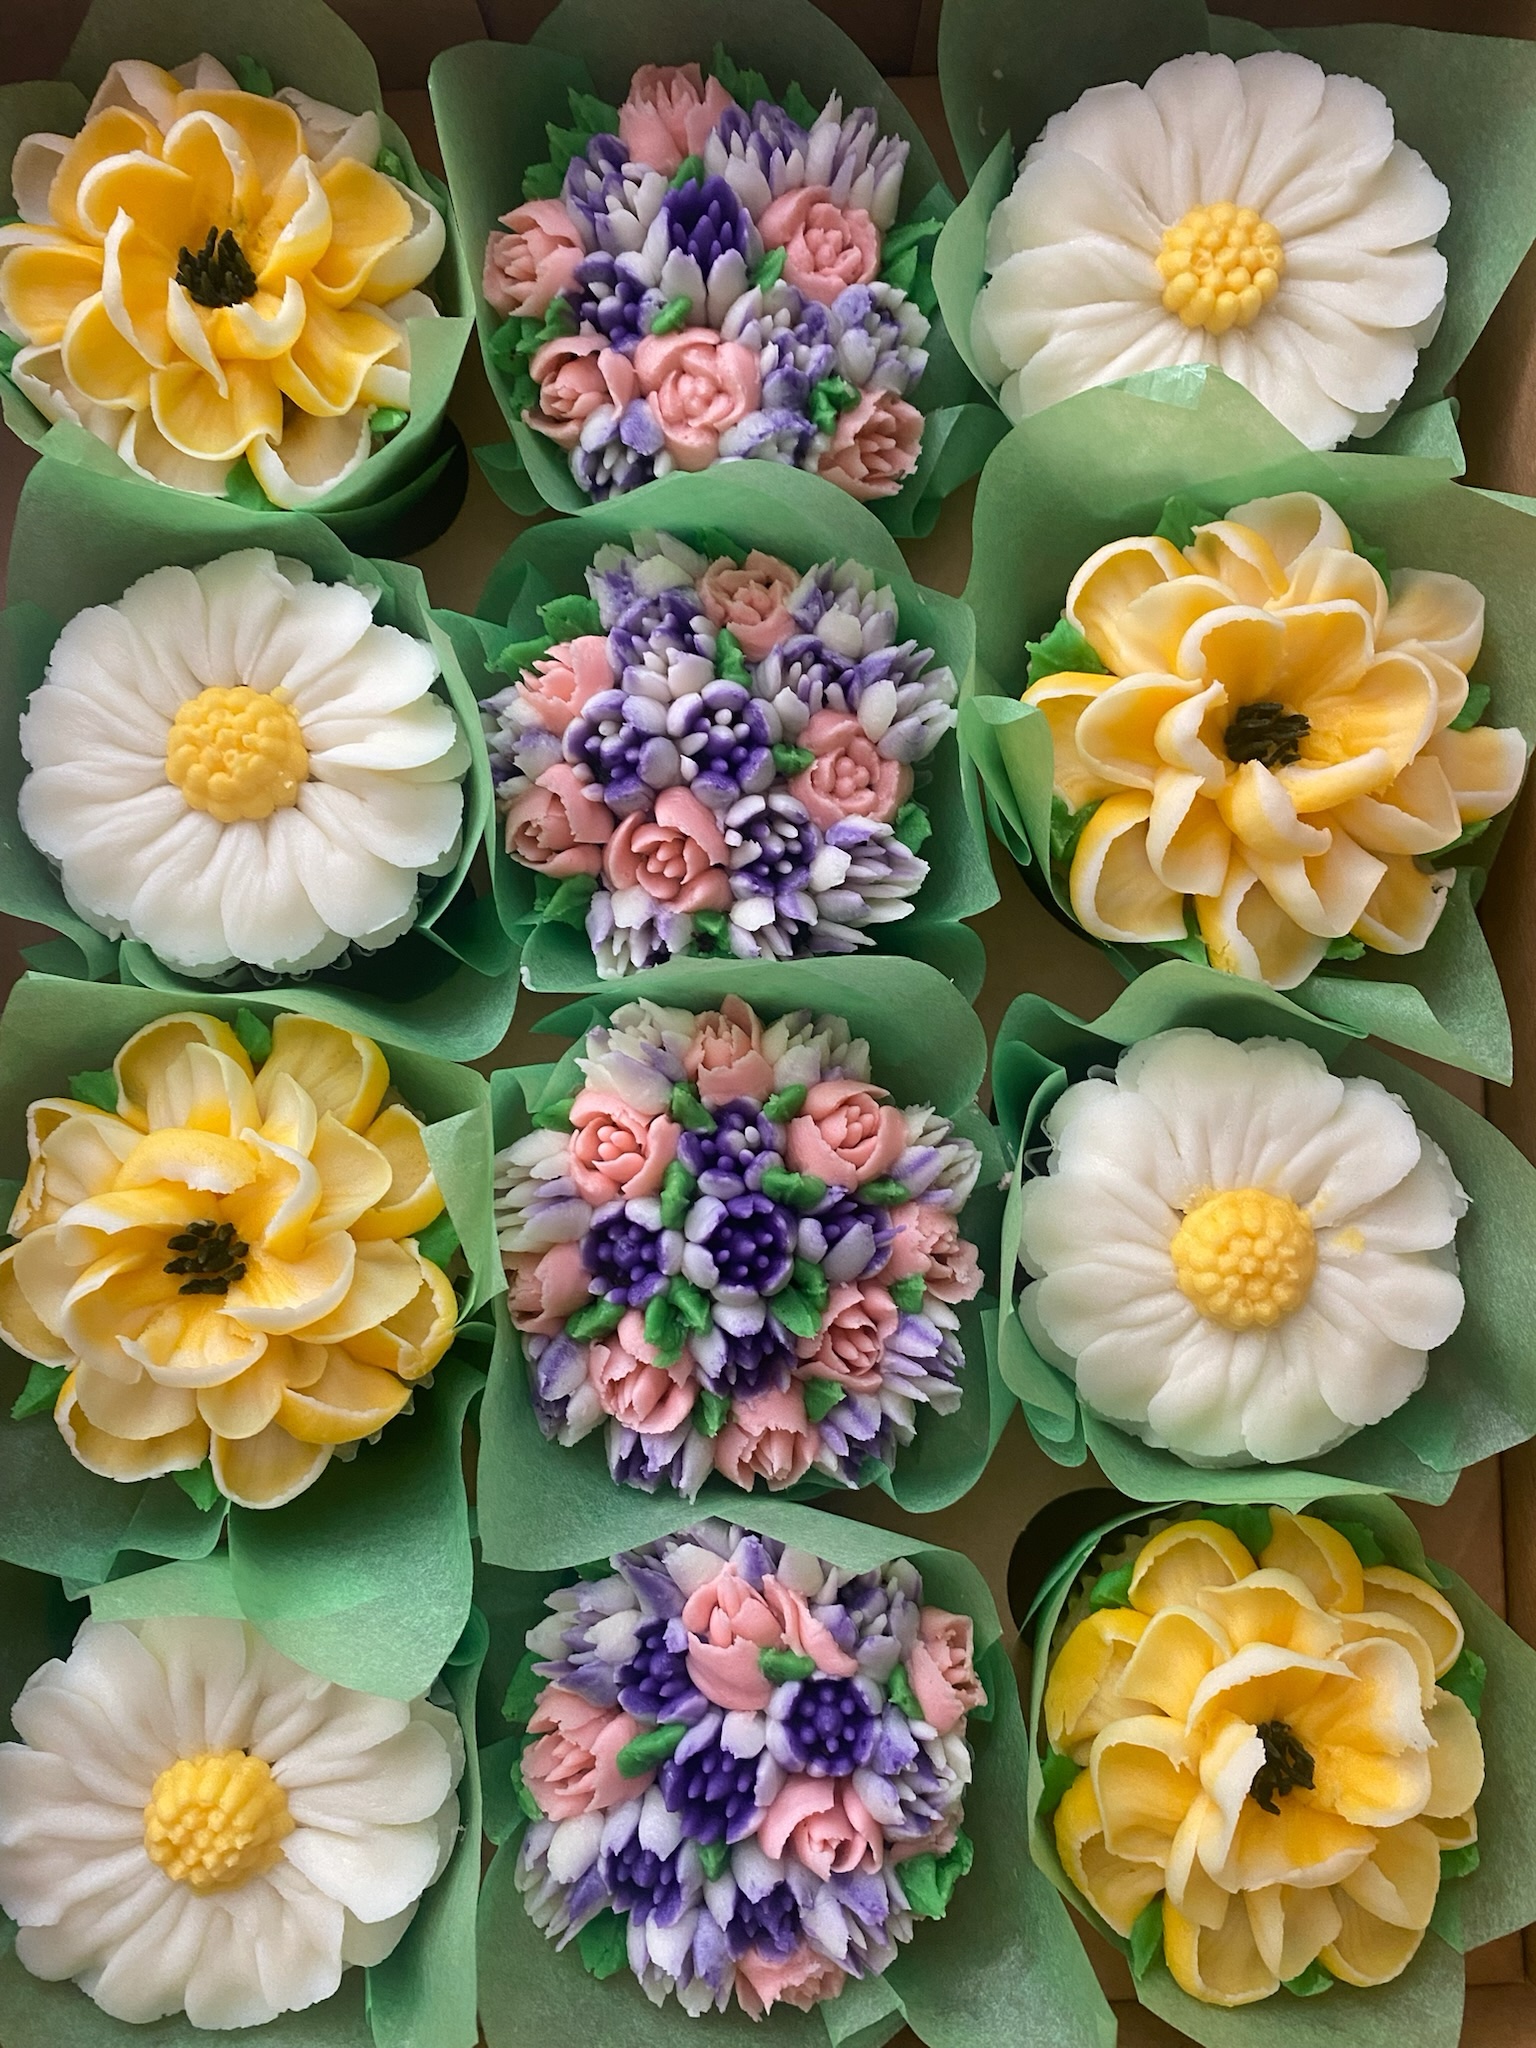 The Giving Cake - Santa Cruz Fancy Flower Cupcakes supporting Santa Cruz County nonprofits